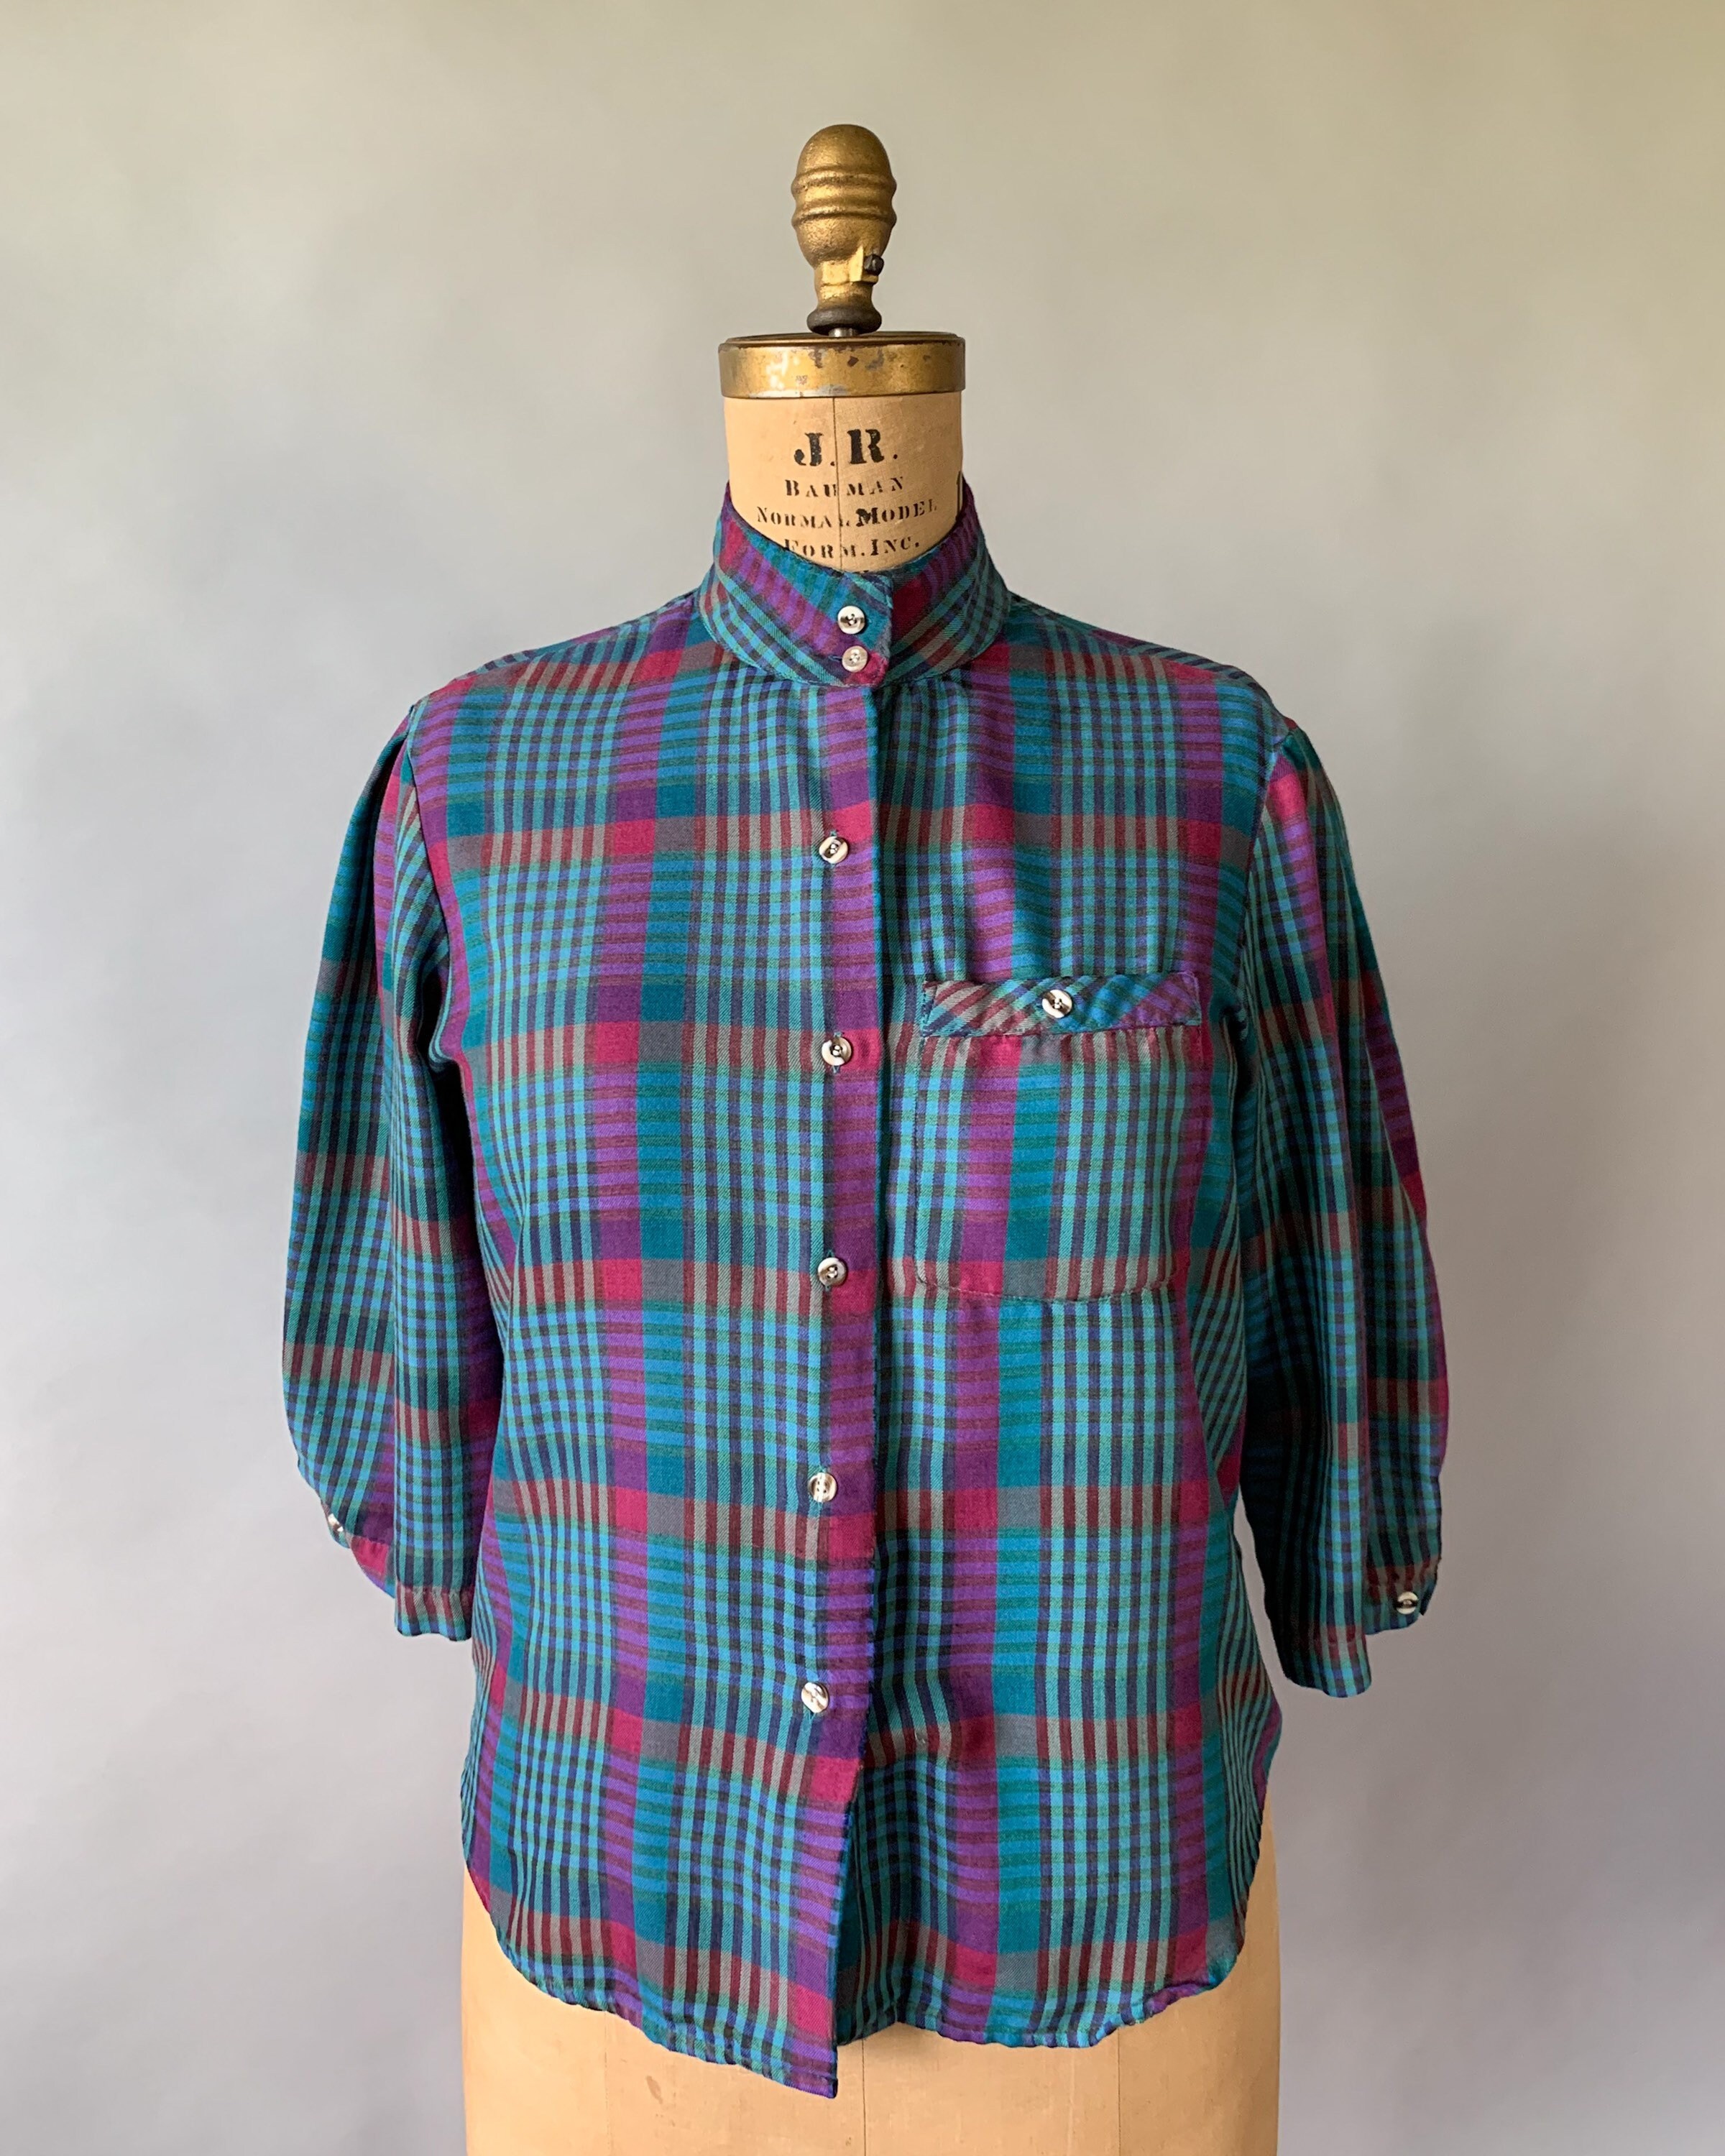 Vintage 1980s teal jewel tone plaid button down shirt, Medium